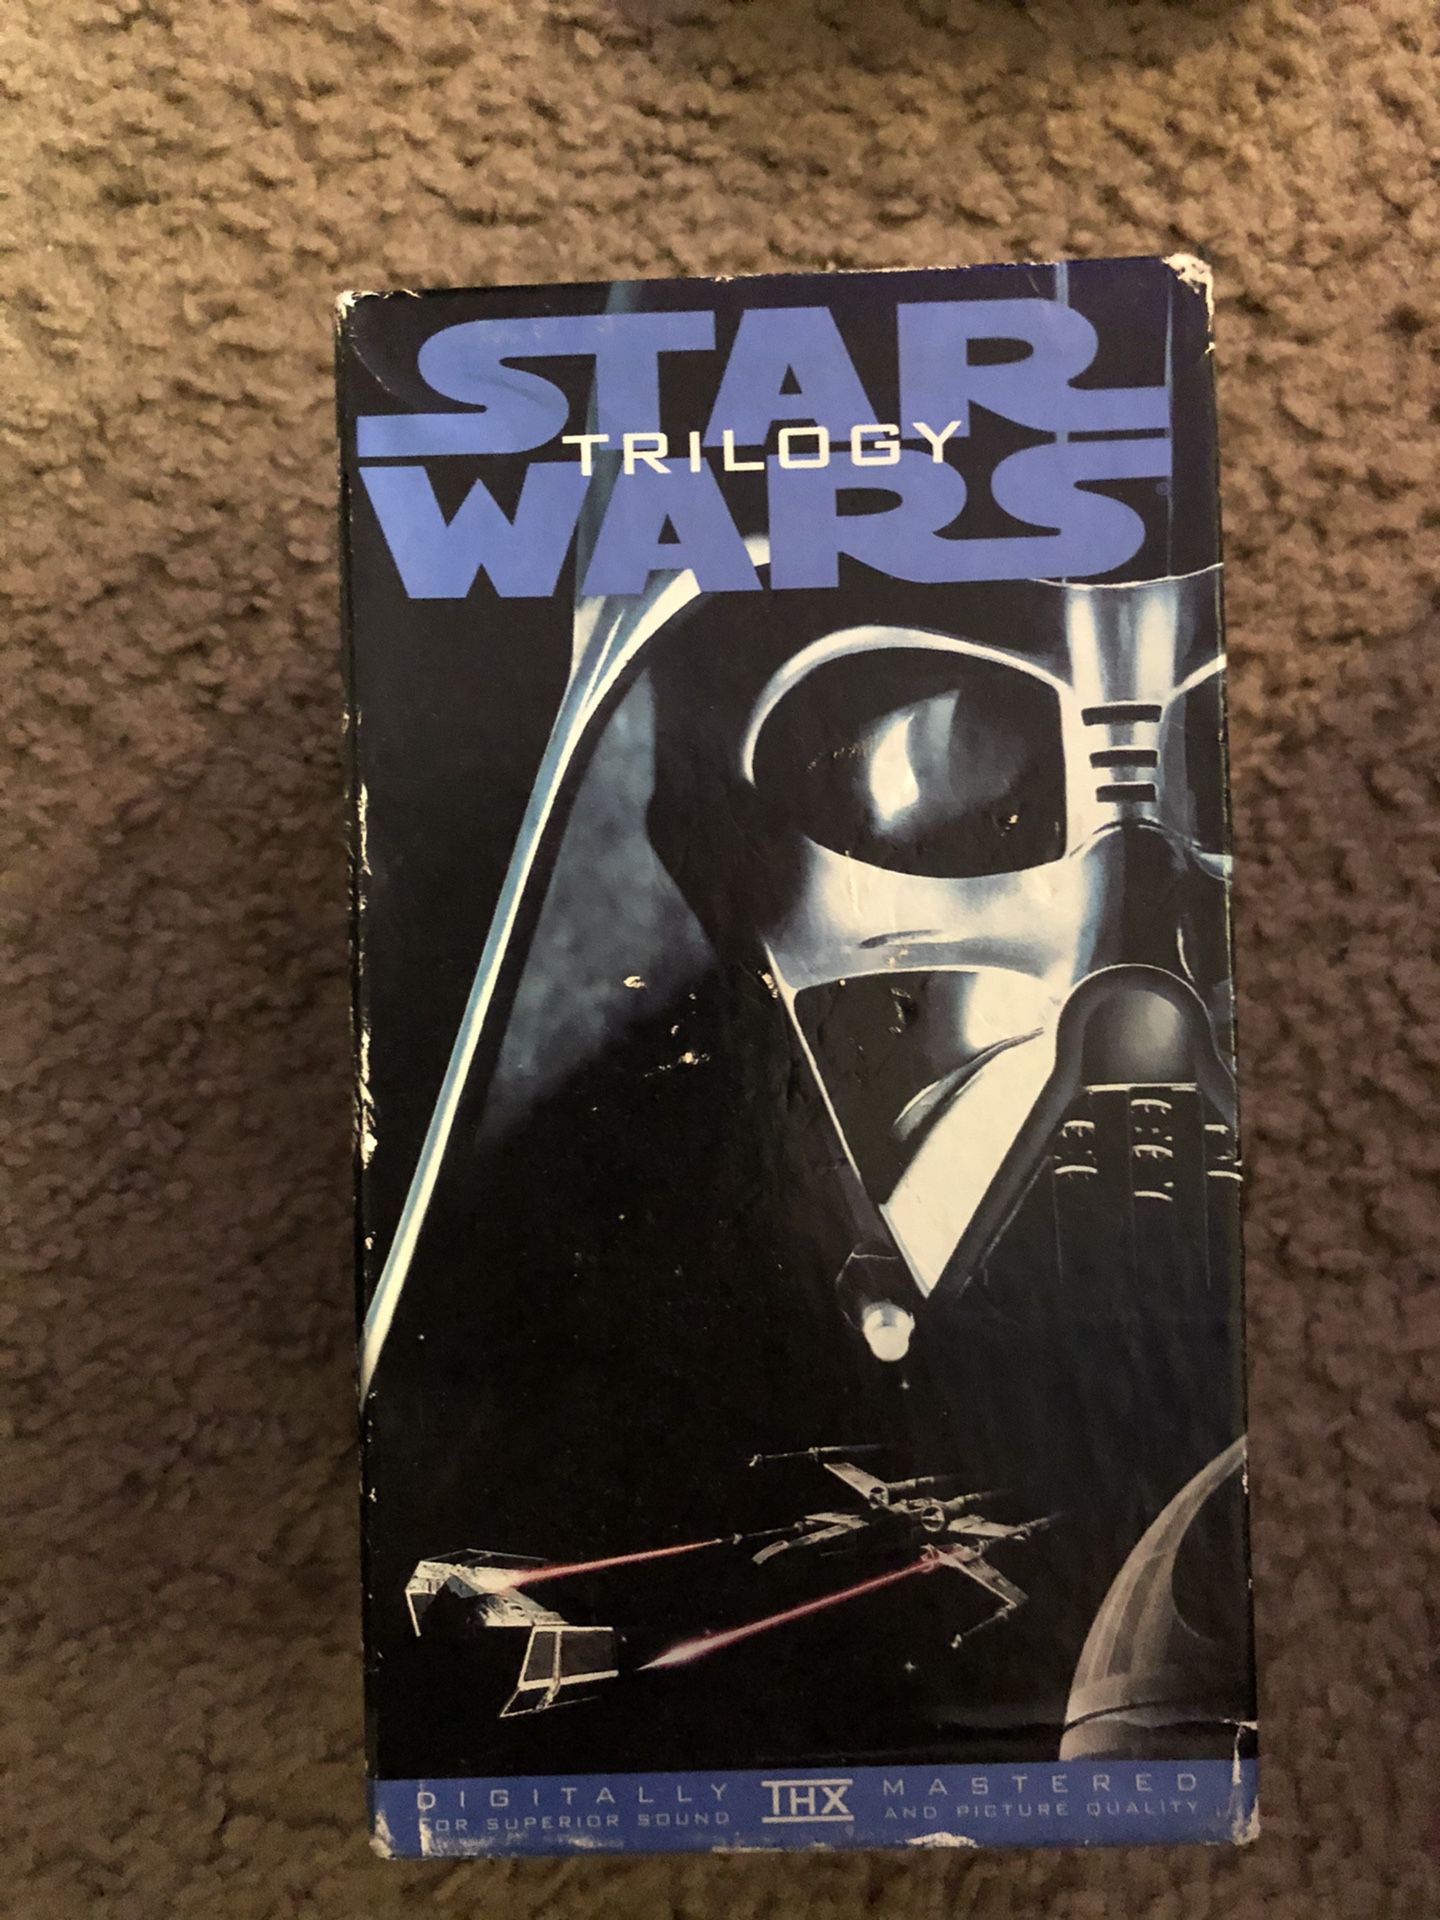 VHS Star Wars trilogy